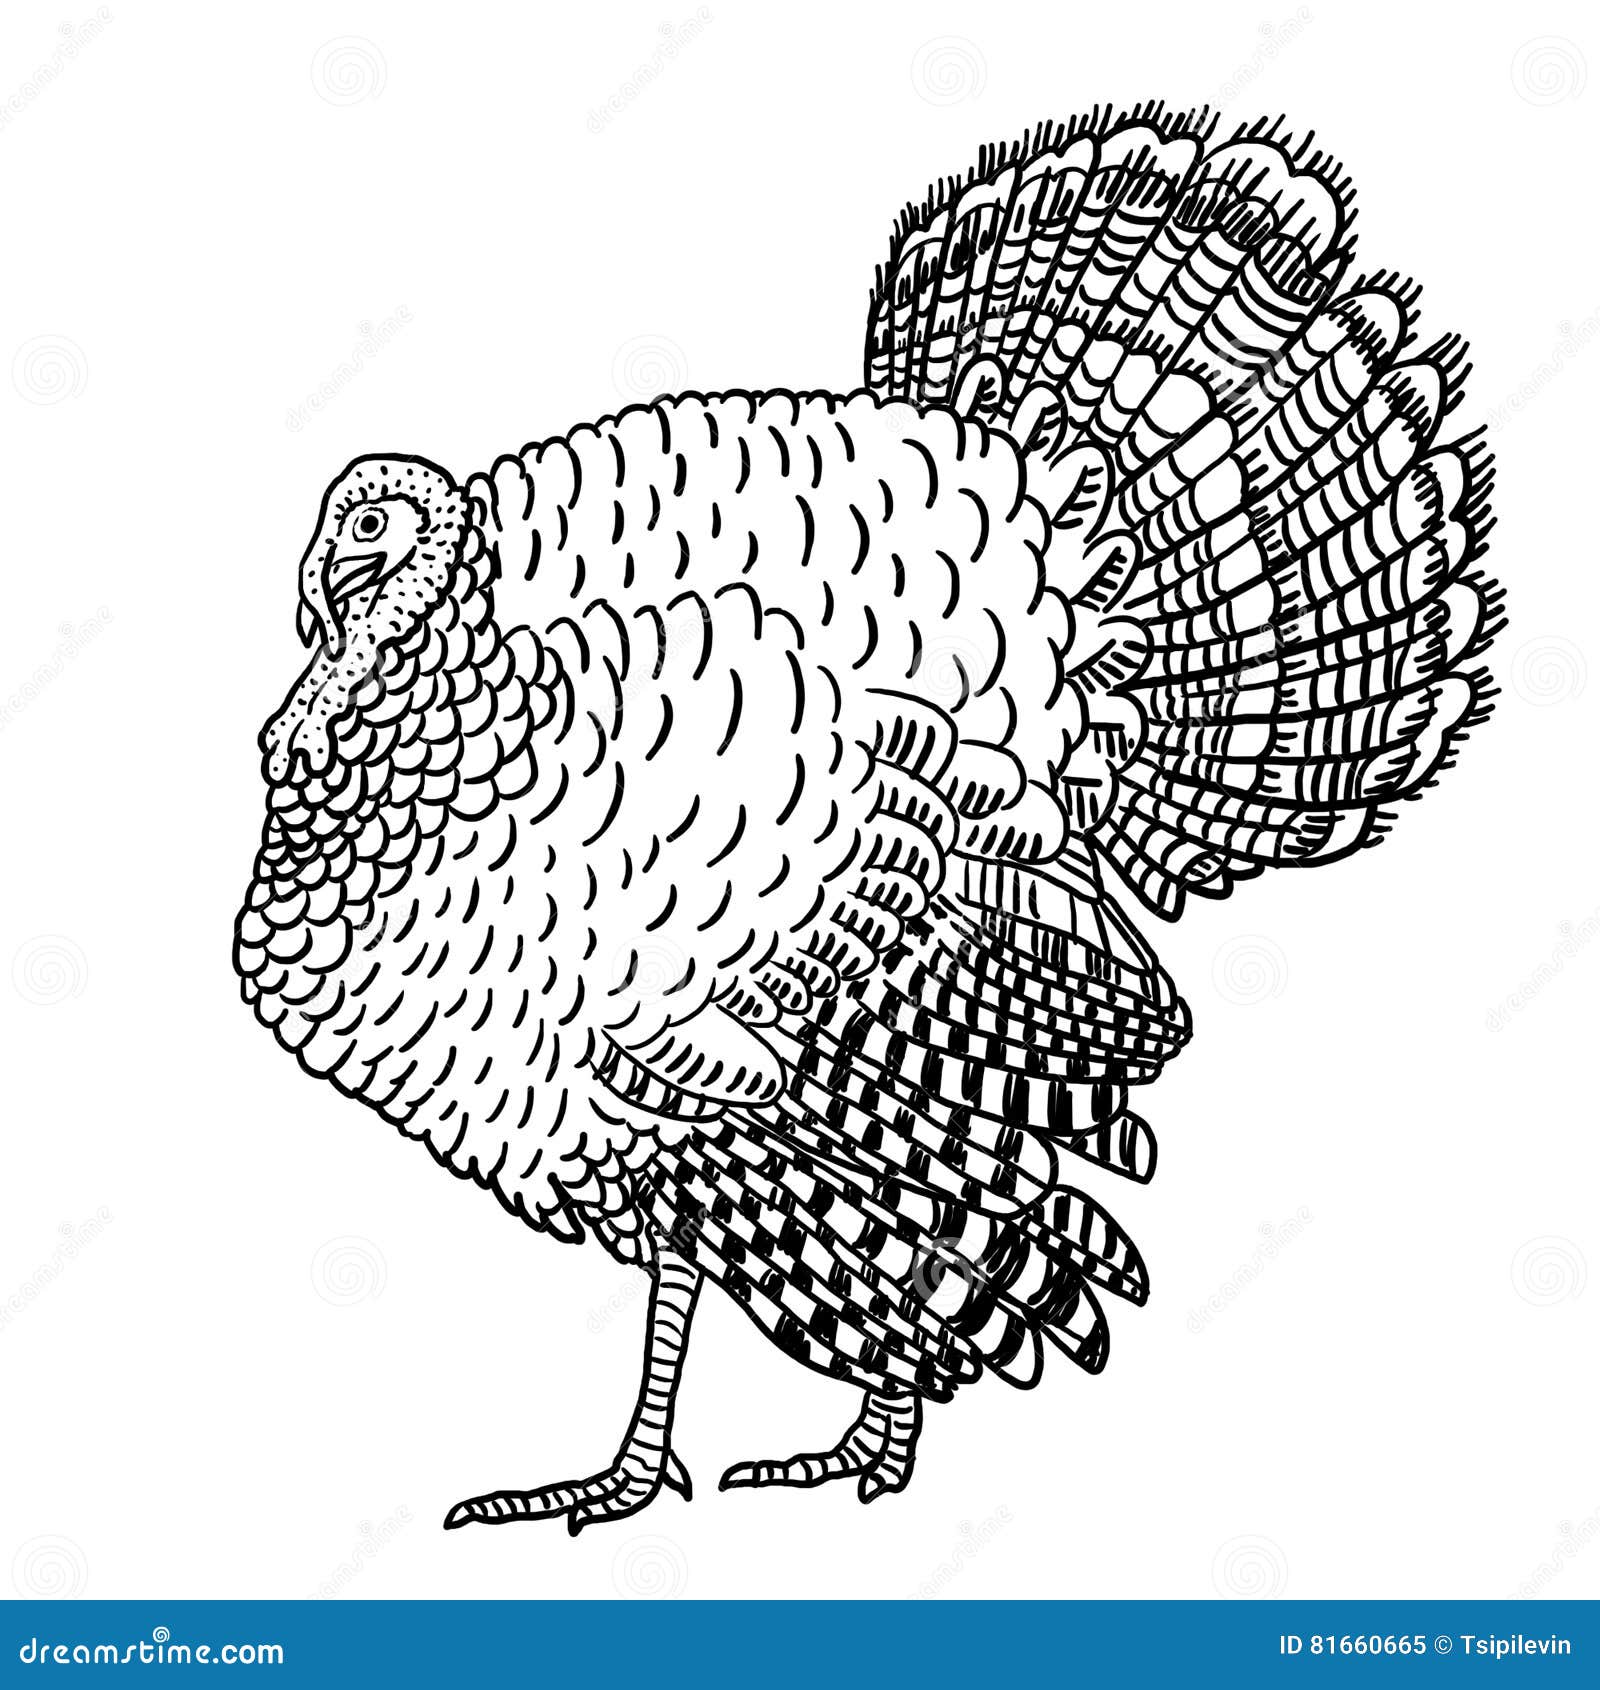 Sketch black turkey on a white background Vector Image